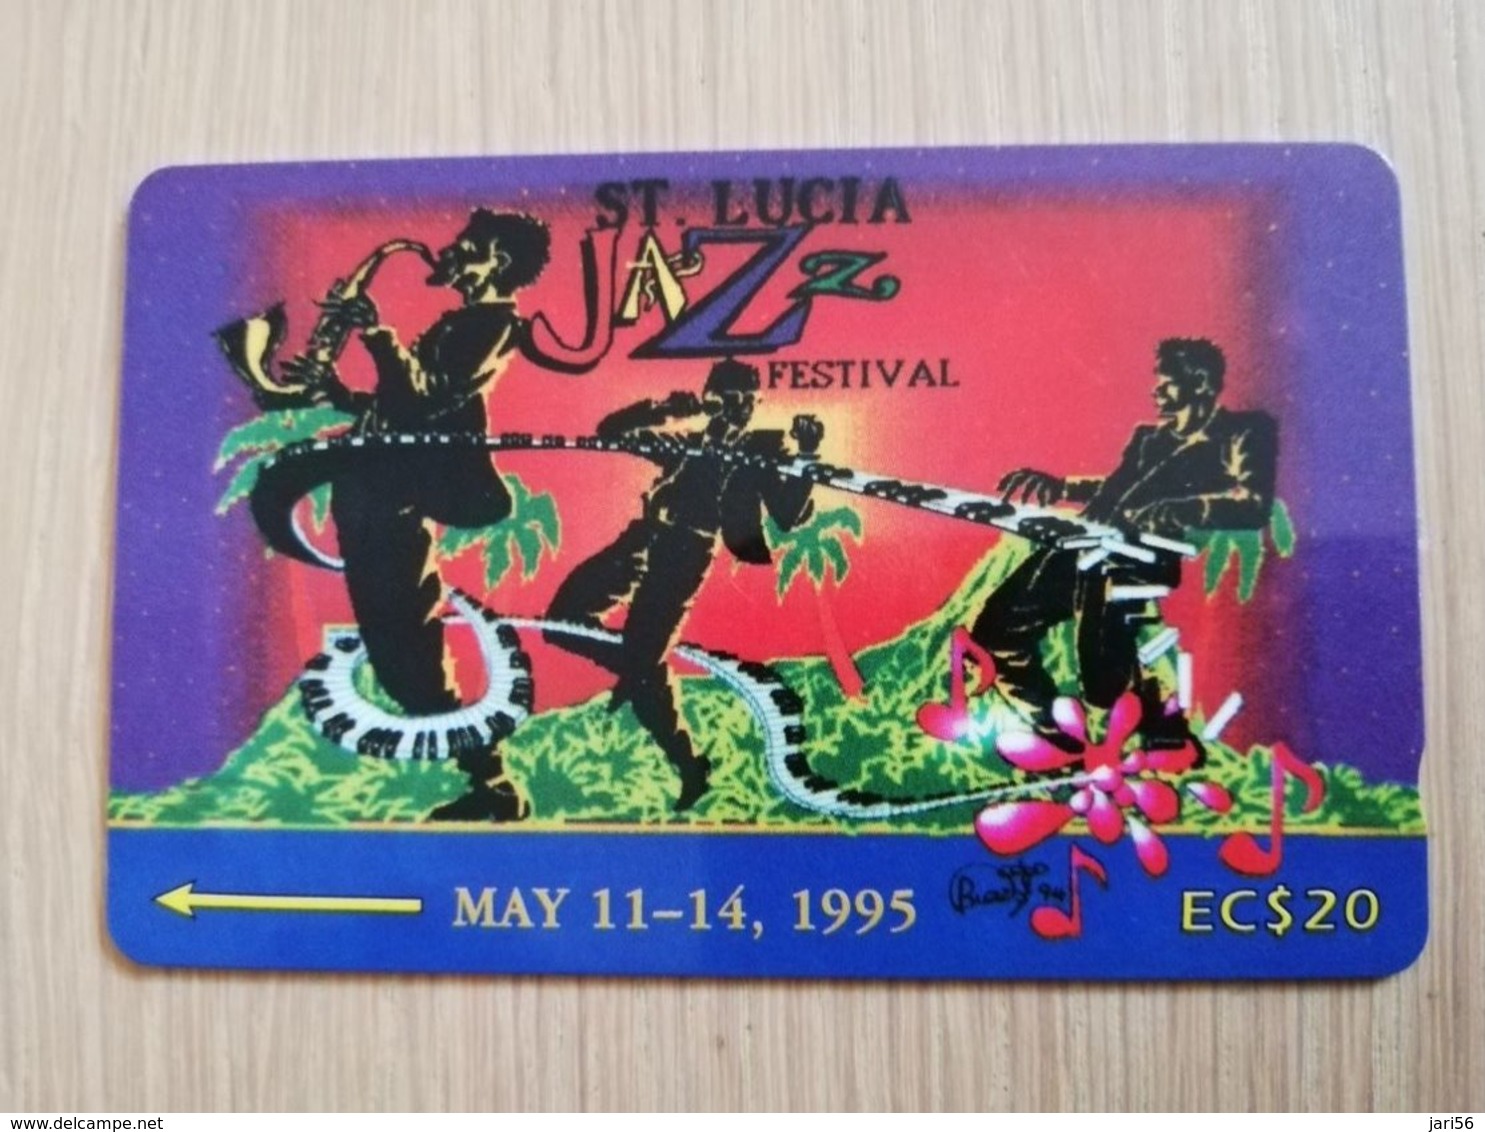 ST LUCIA    $ 20   CABLE & WIRELESS  STL-19A  19CSLA      JAZZ FESTIVAL 1995  Fine Used Card ** 2419** - Sainte Lucie